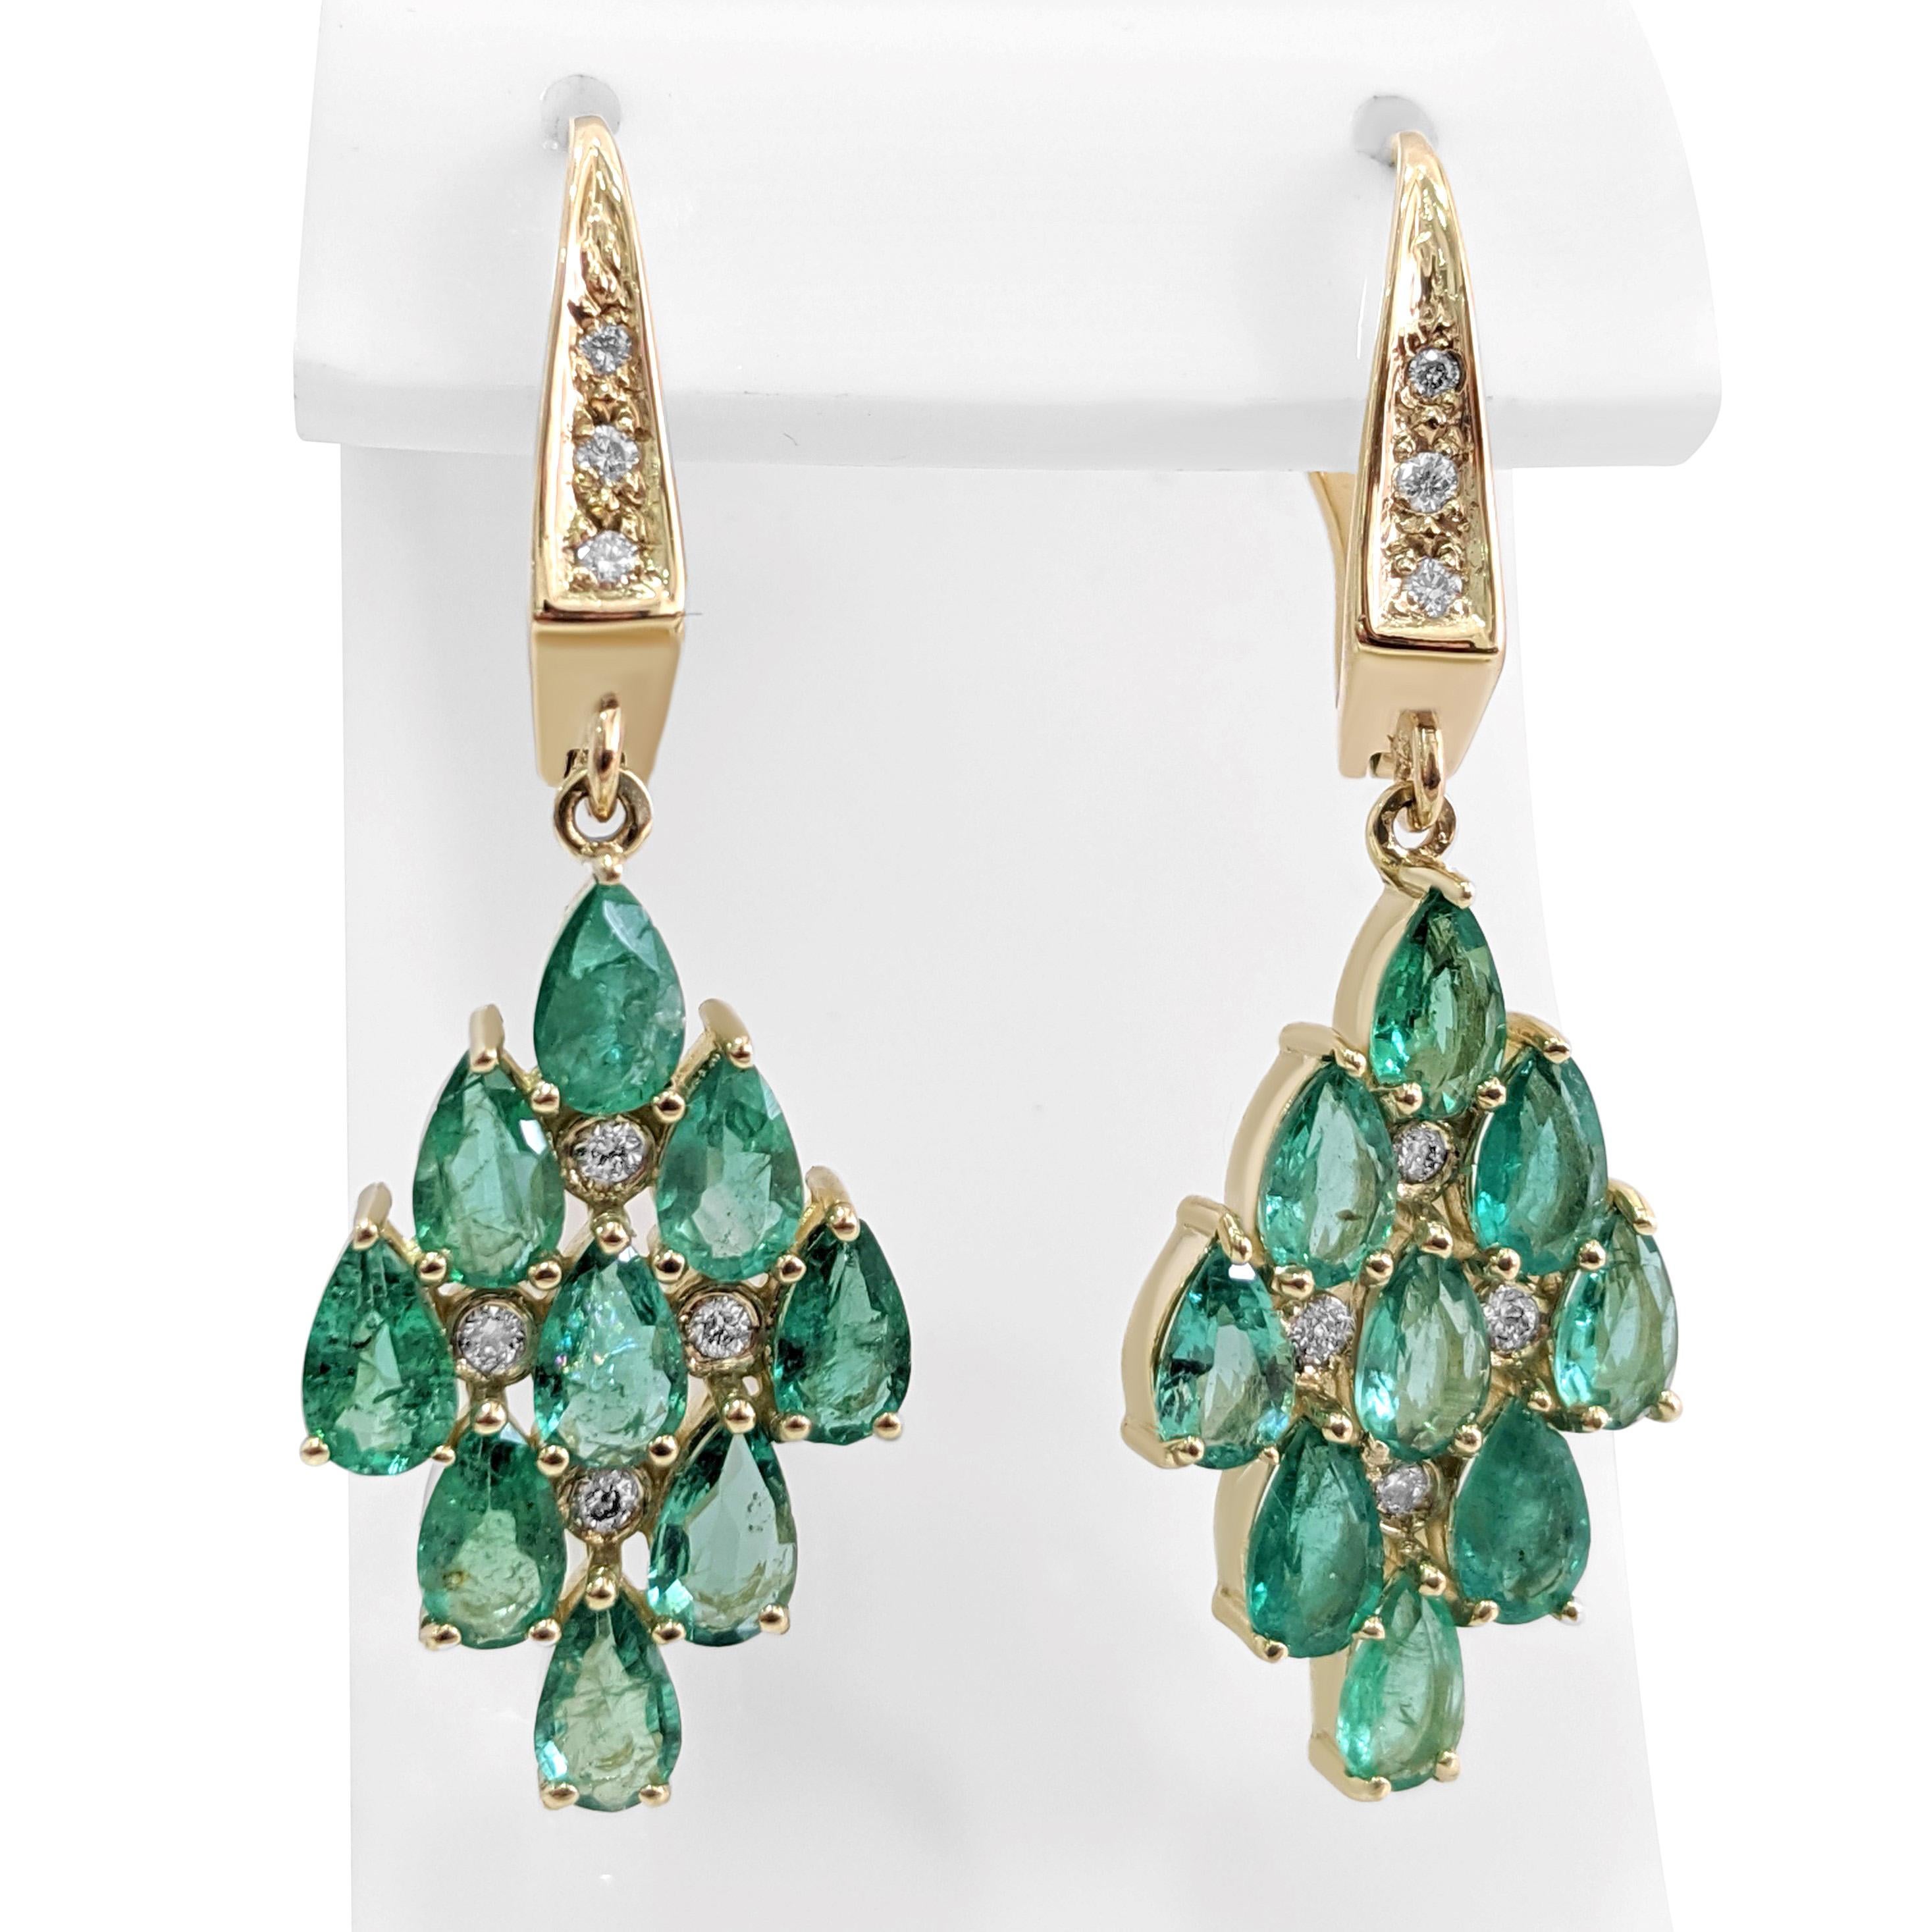 Mixed Cut $1 No Reserve! - 3.12cttw Emerald & 0.10cttw Diamonds, 14k Yellow Gold Earrings